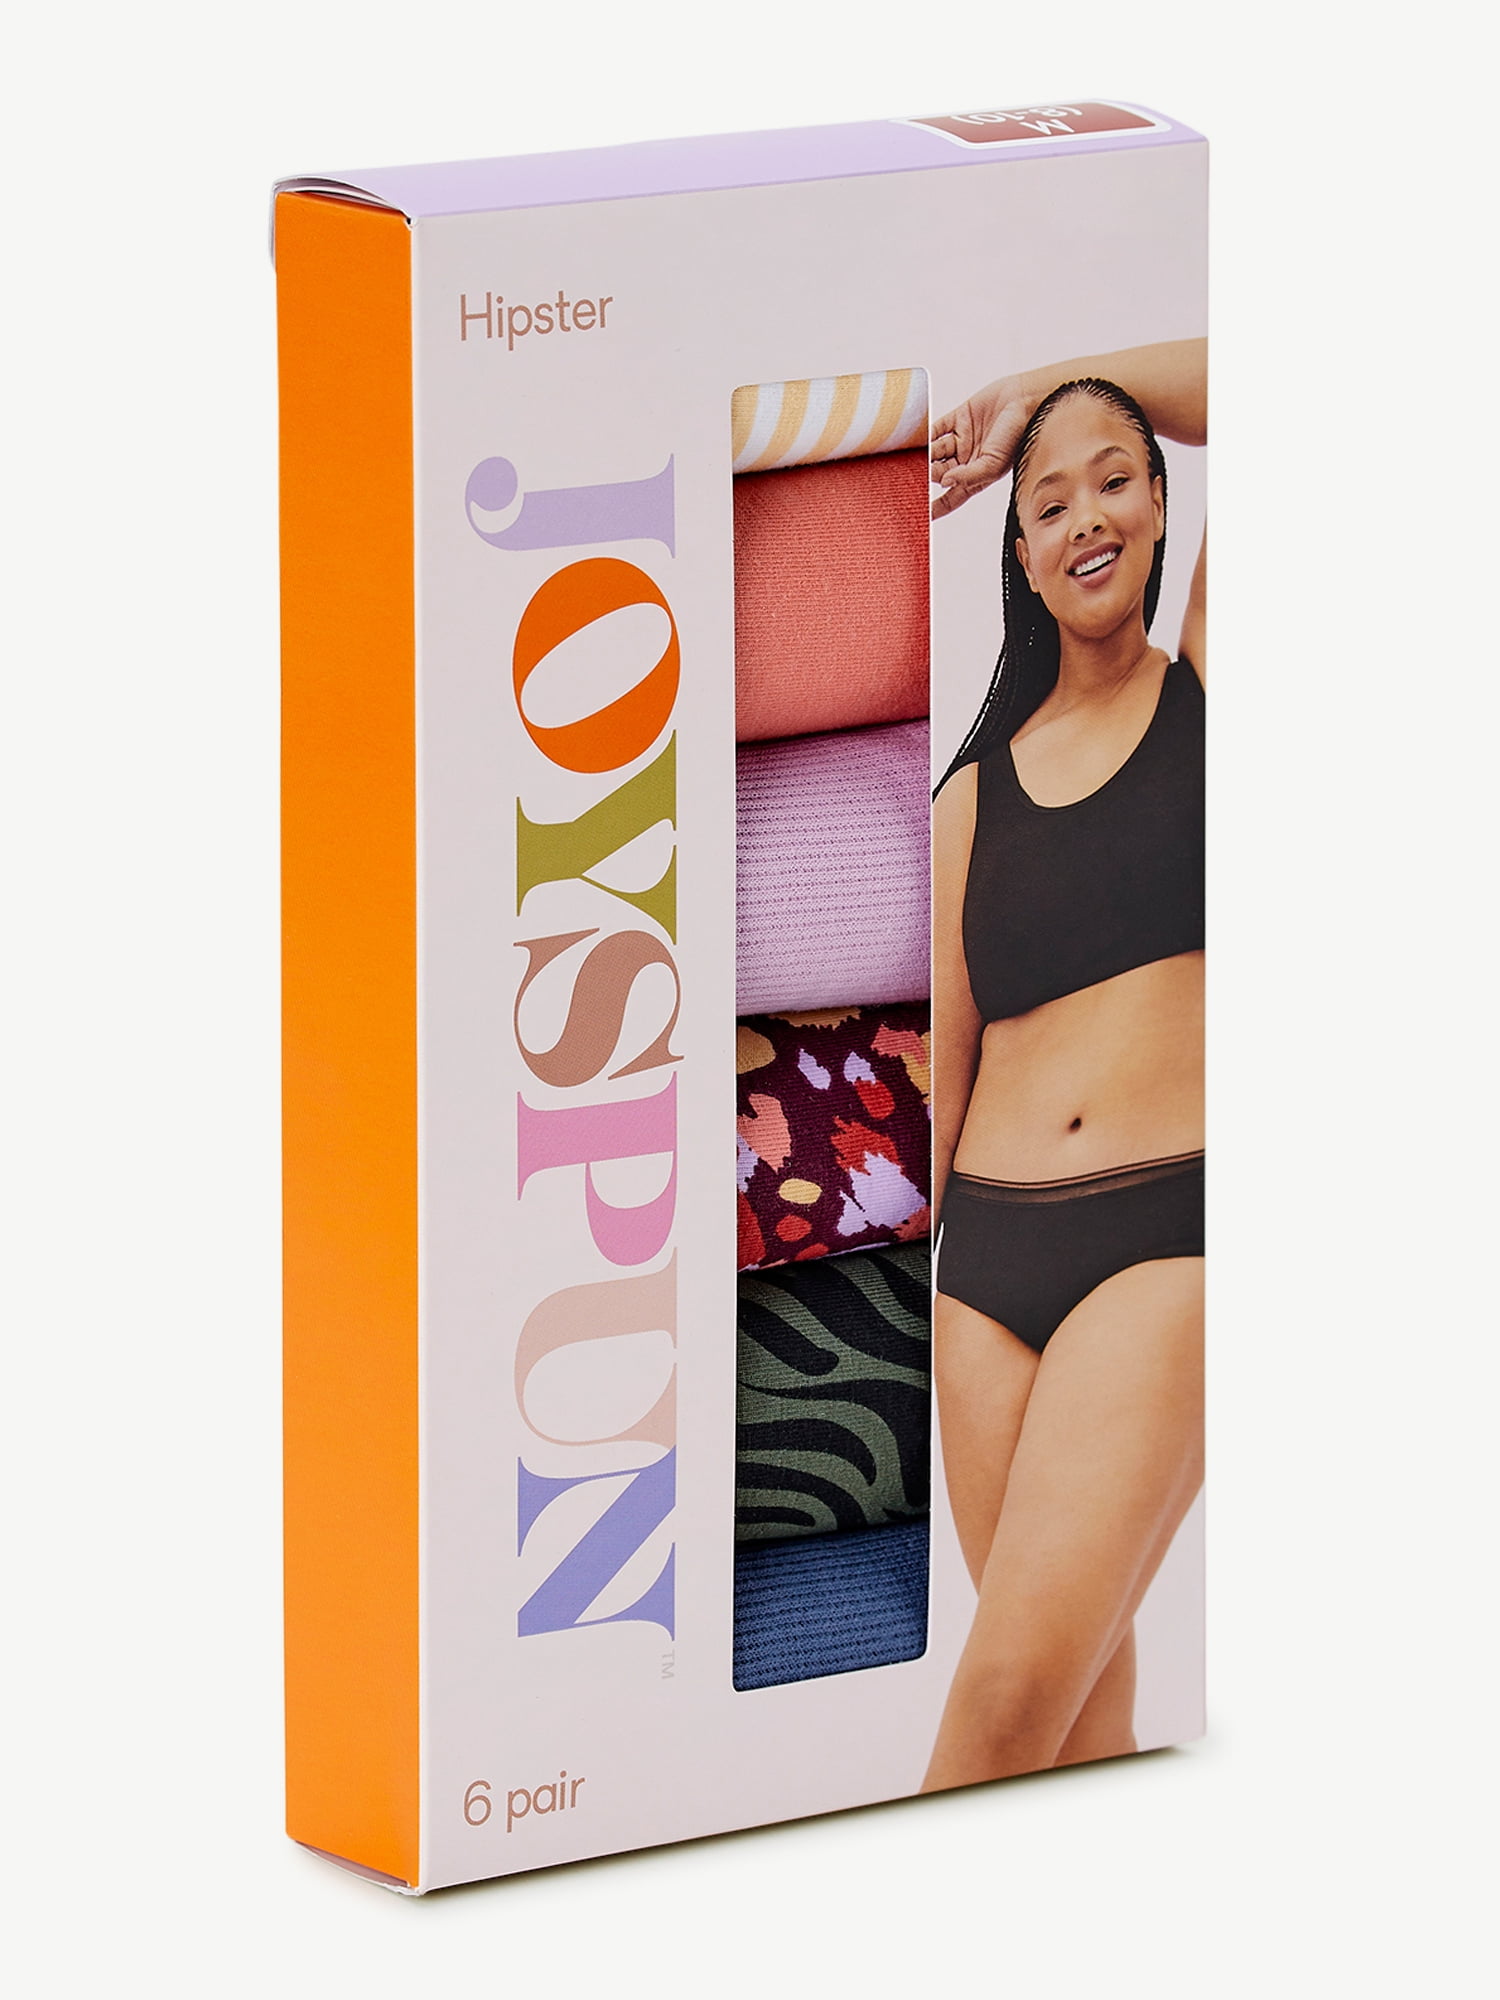 Joyspun Women's Cotton Hipster Panties, 6-Pack, Sizes S to 2XL 